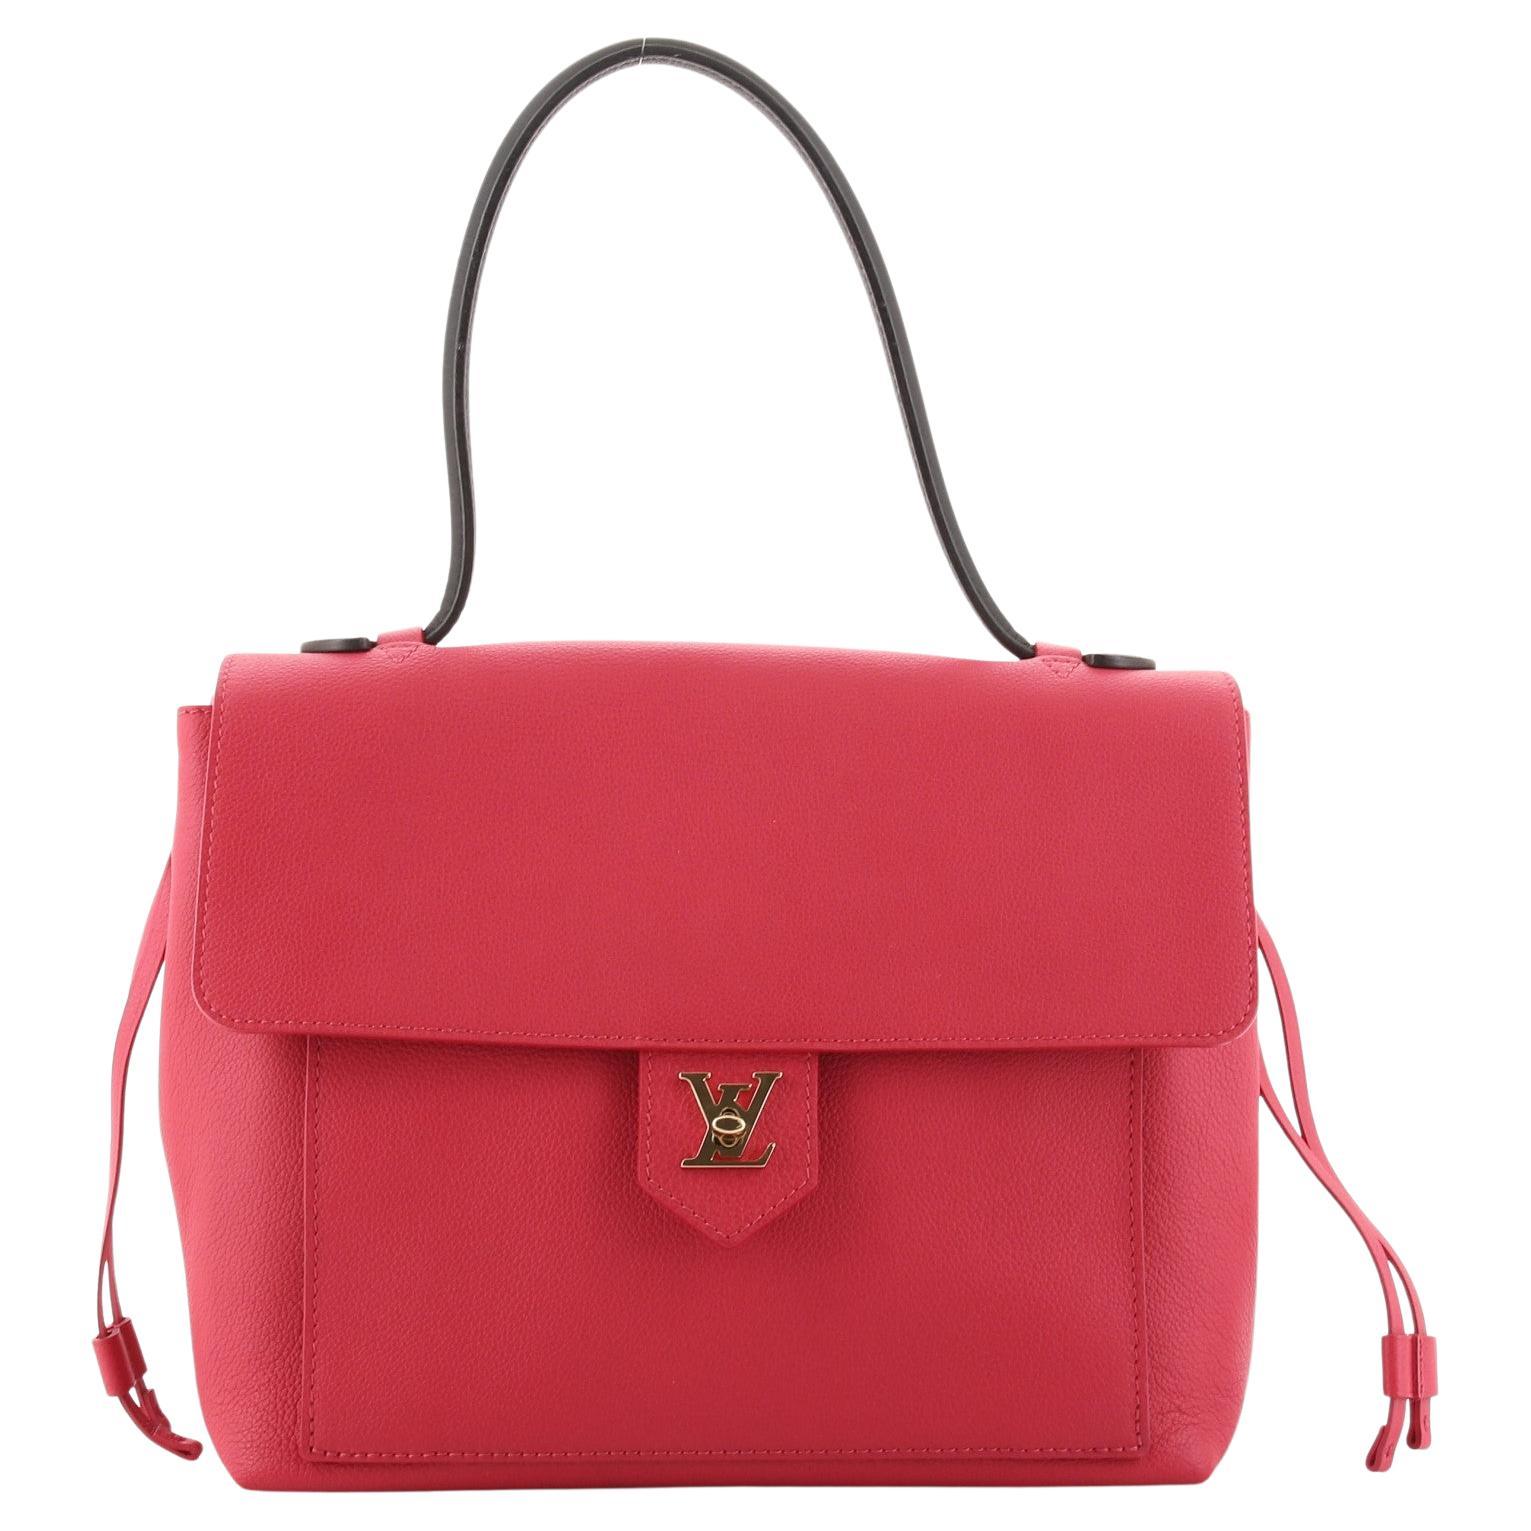 Louis Vuitton Lockme Handbag Leather PM